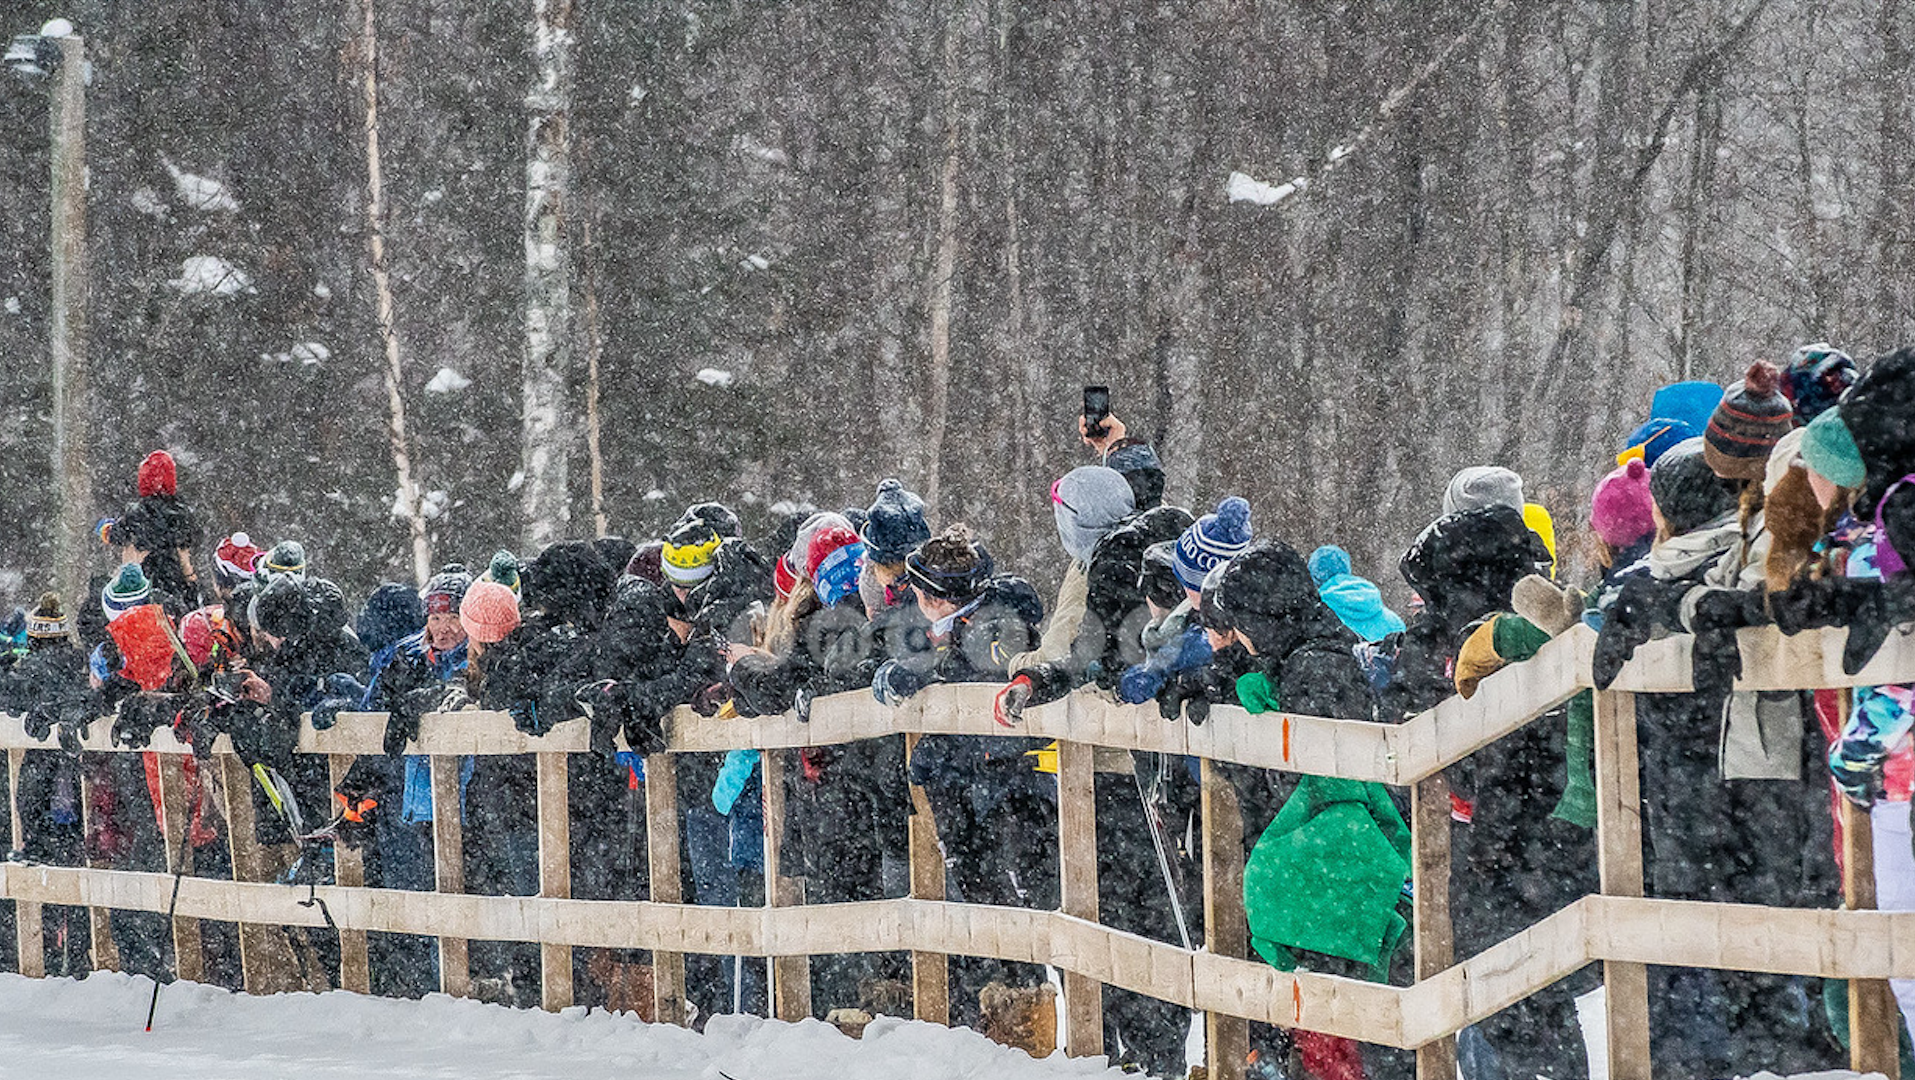 Spectators along the fence at a ski race